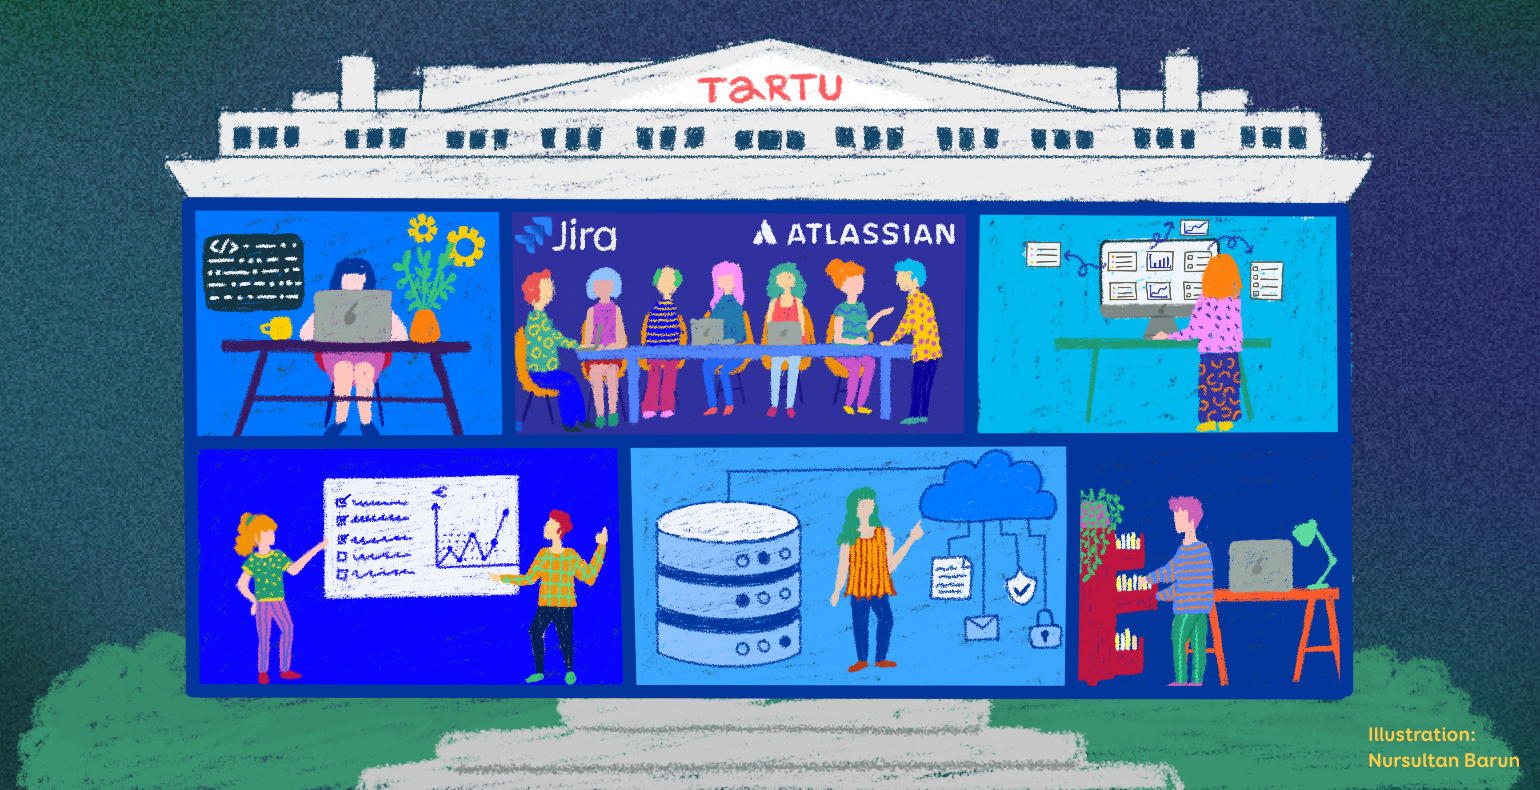 Illustration of Atlassian solutions in Tartu City Government